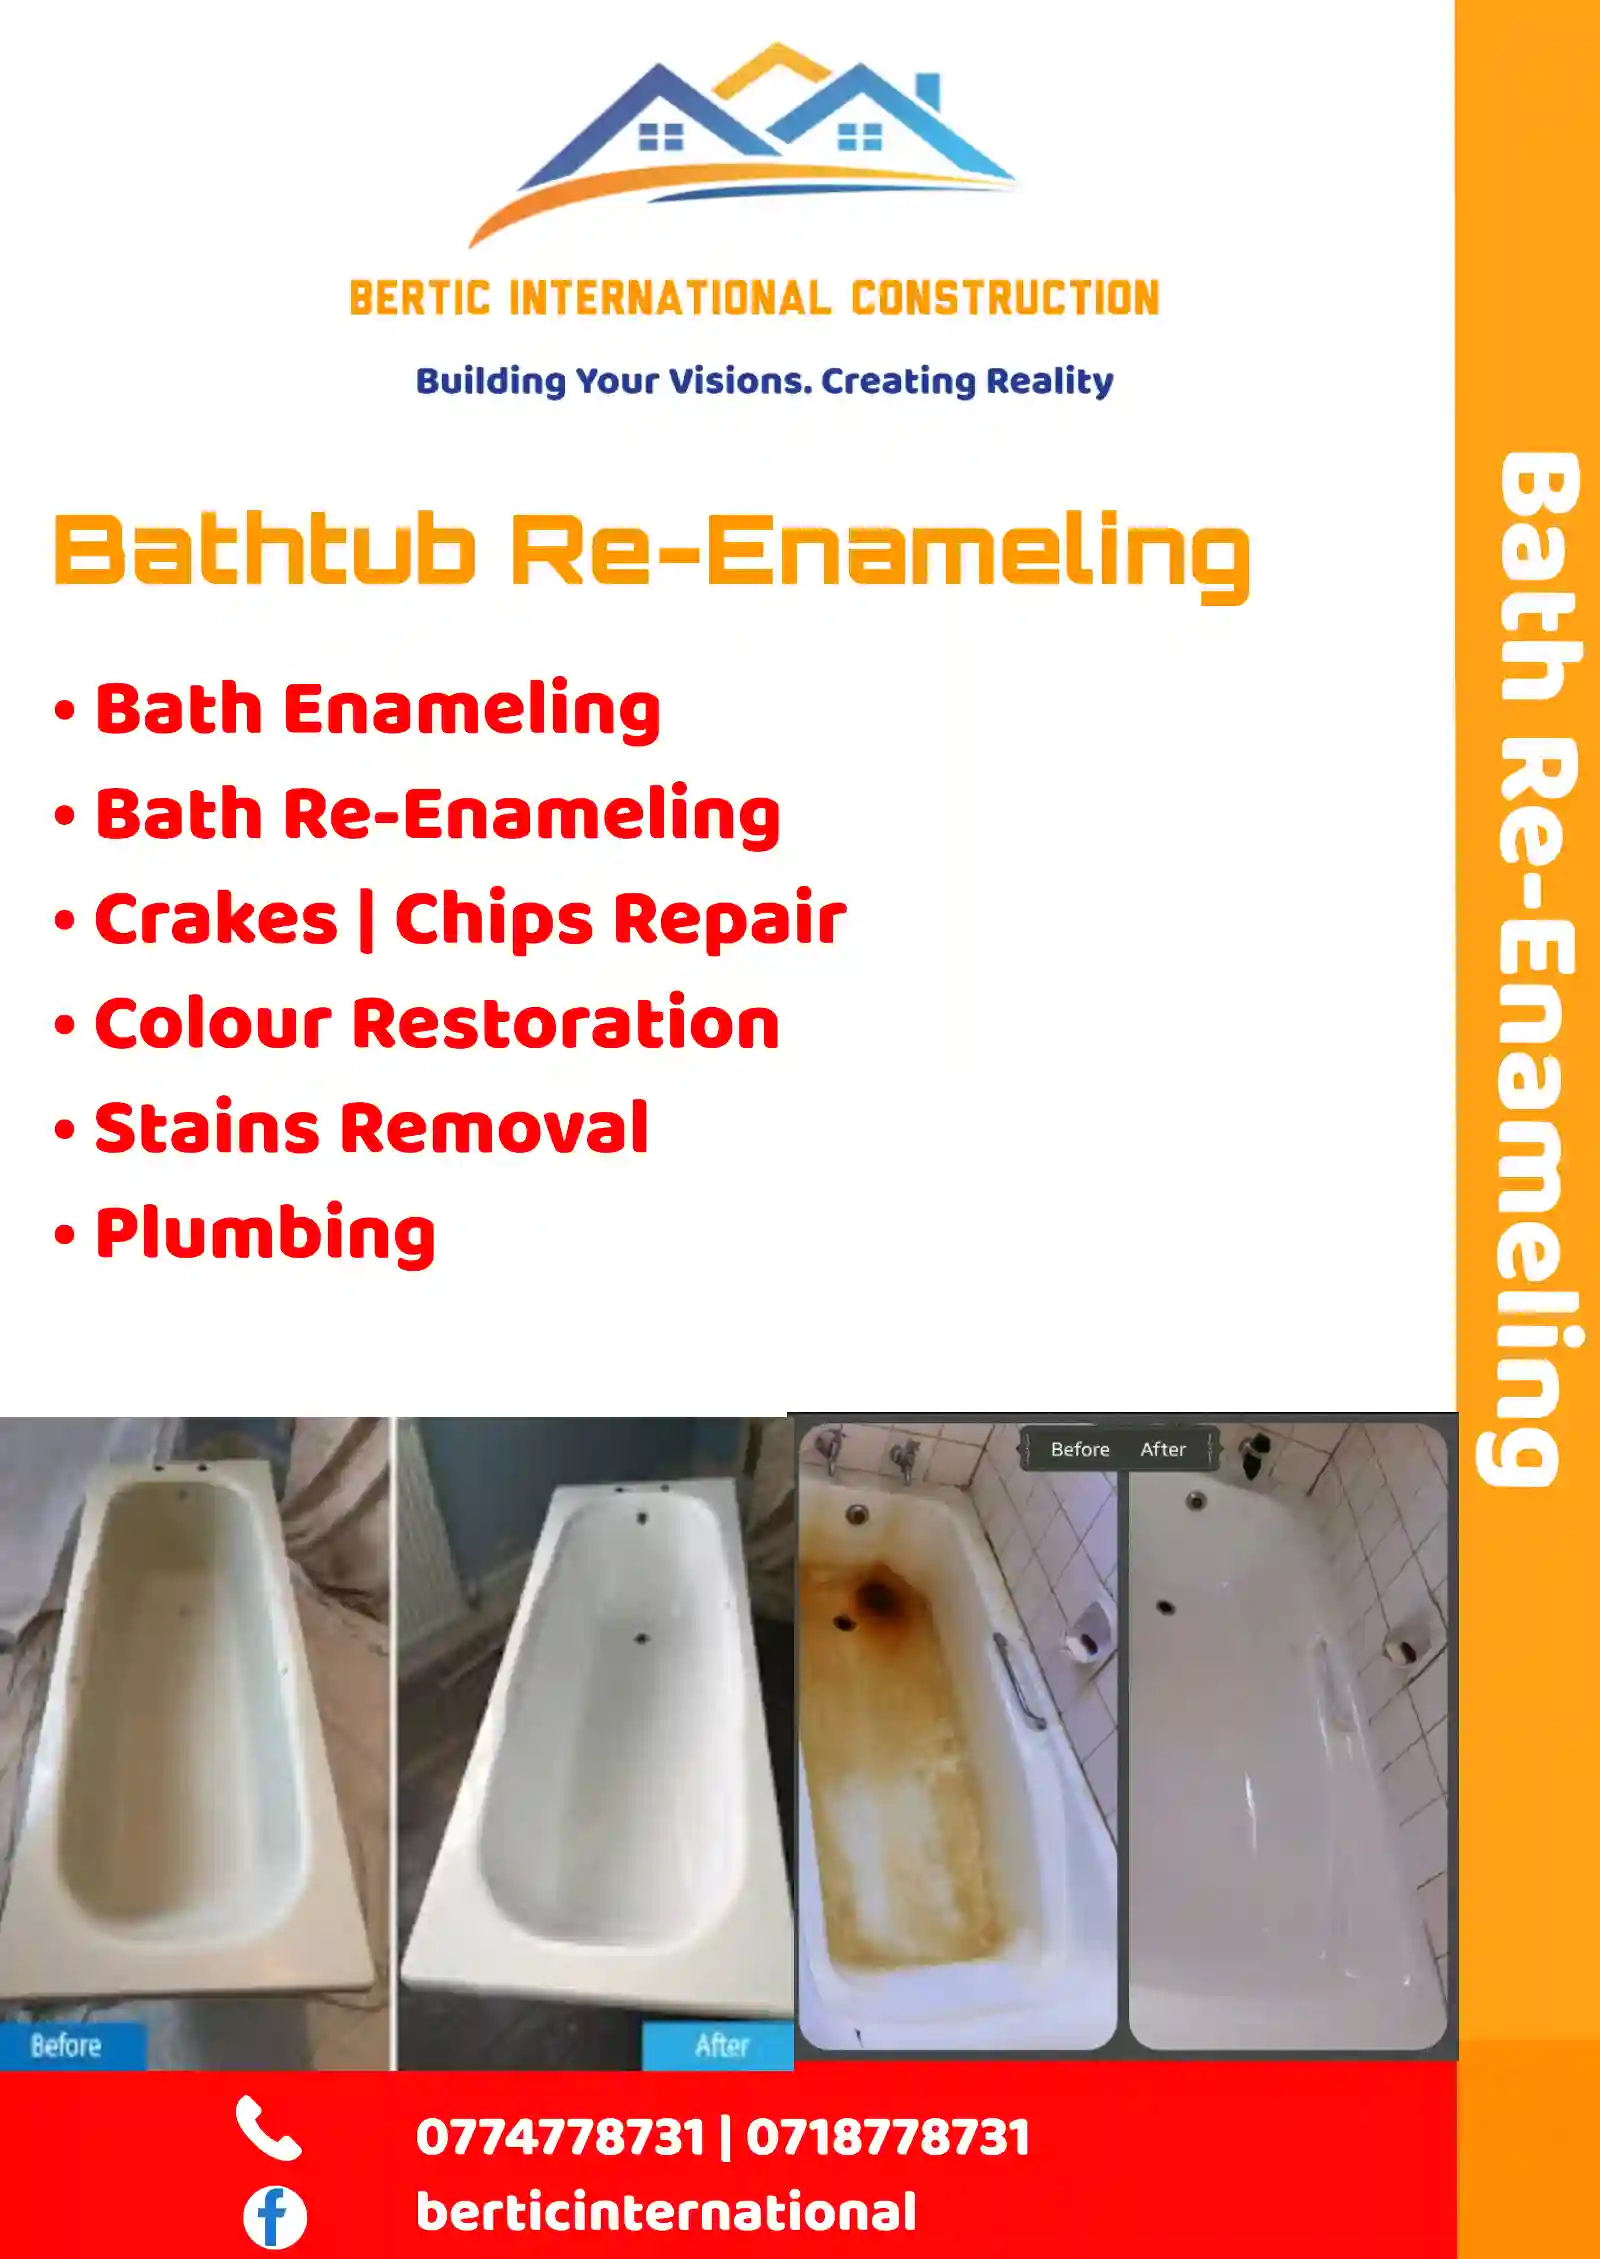 Bath Enameling